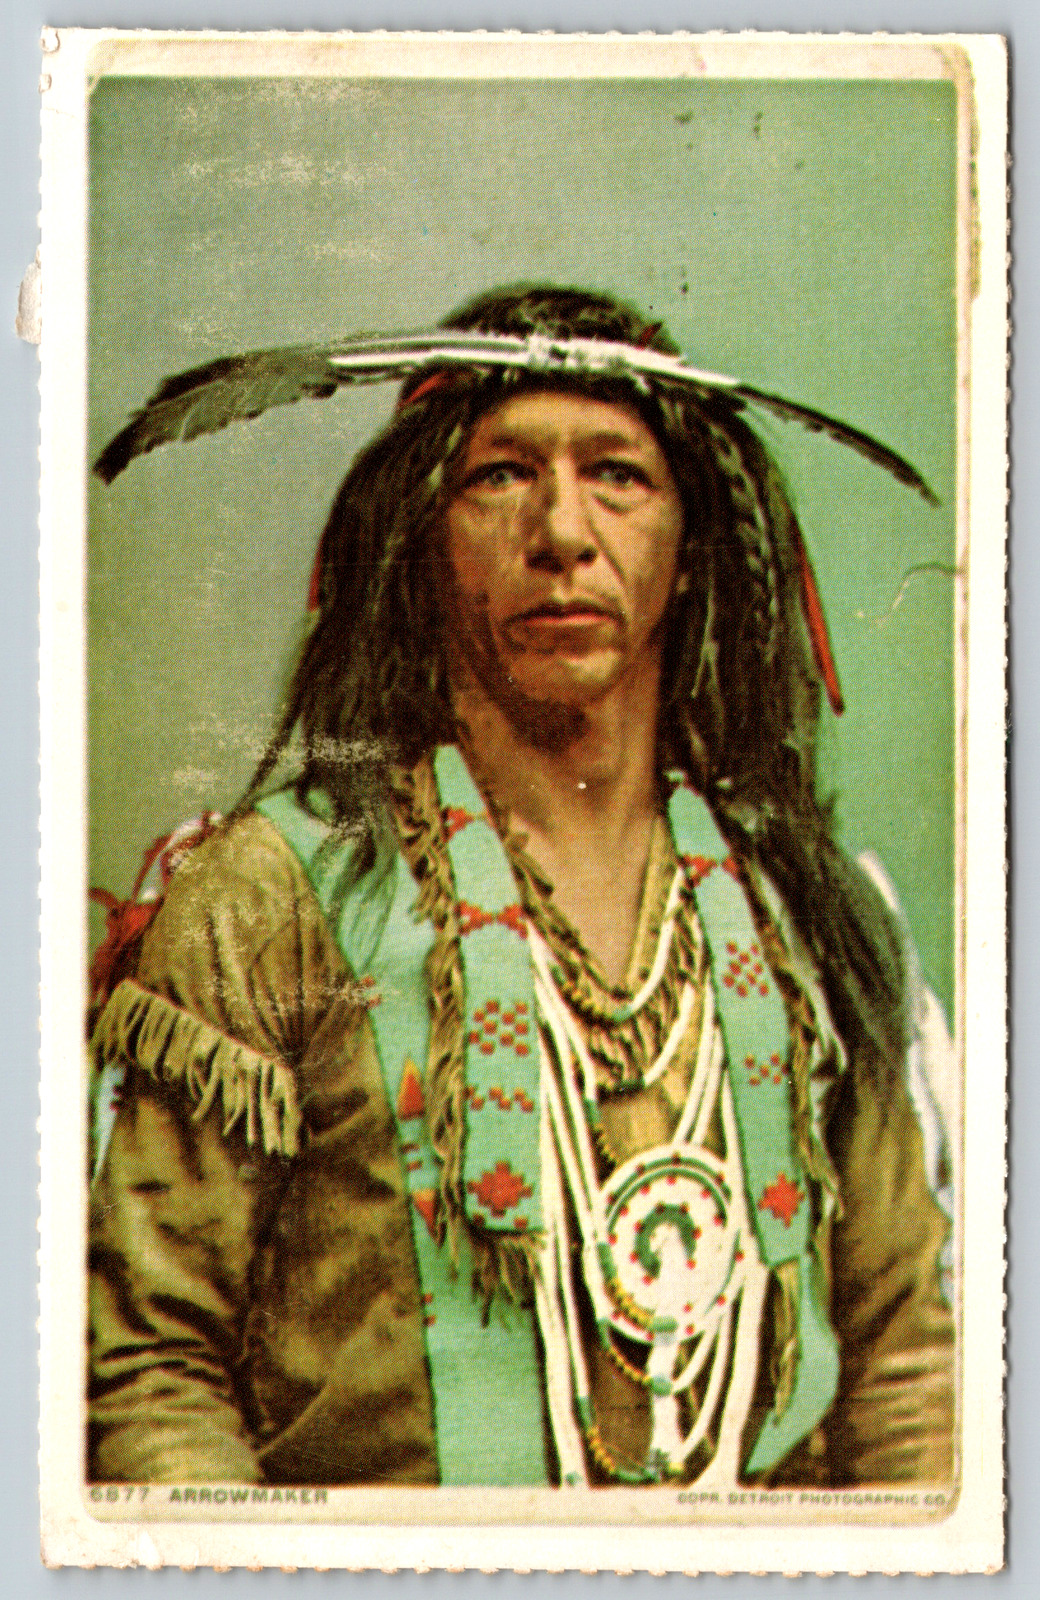 c1960s Arrowmaker Indian Native American Vintage Postcard